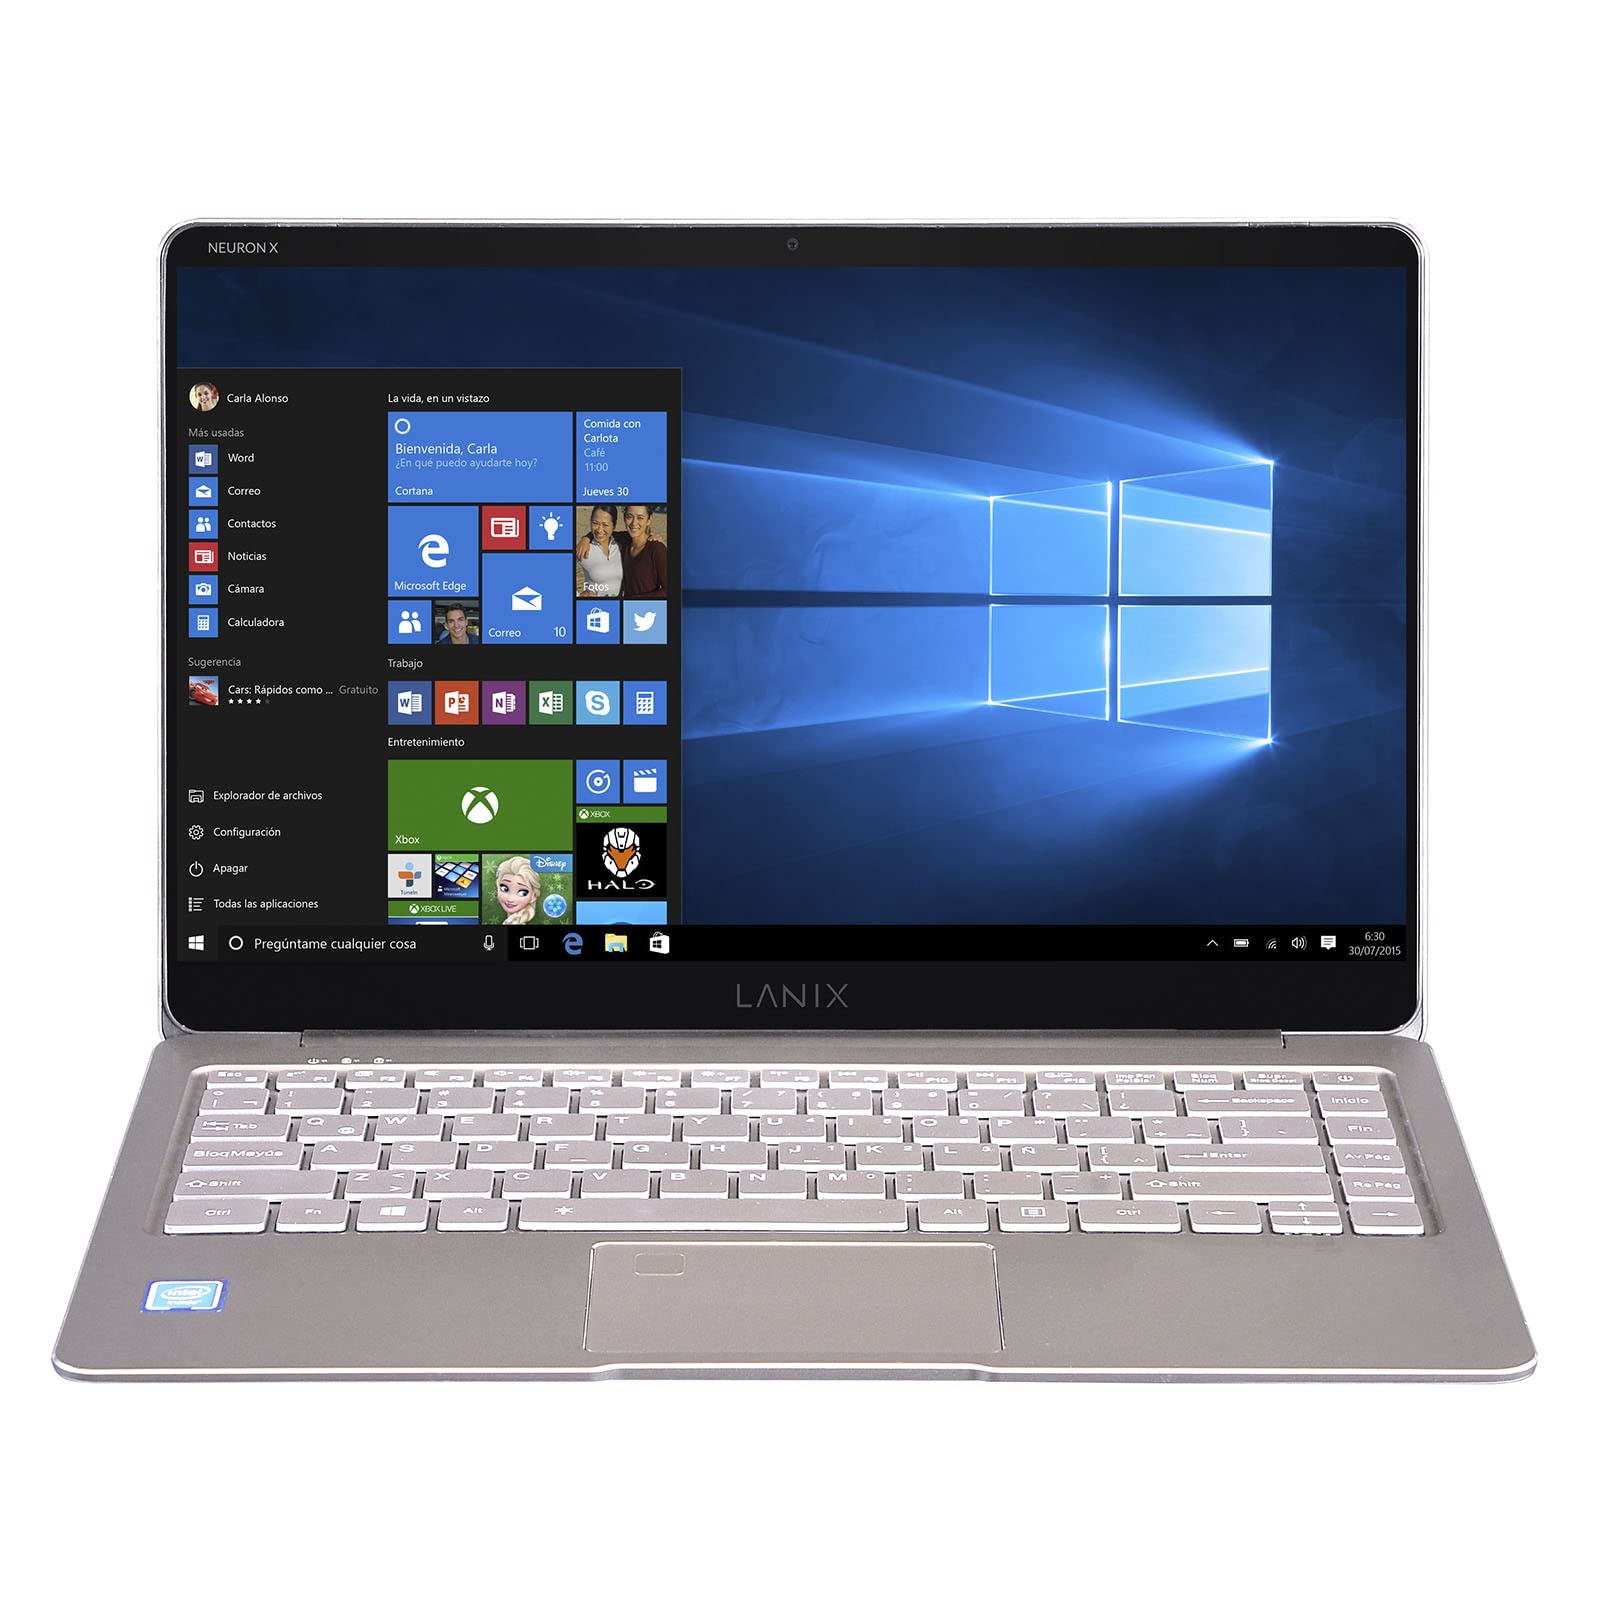 Laptop Lanix 141 Celeron N4020 8Gb128Gb Ssd Full Hd Teclado Iluminado Producto Metal Aluminio - NEURON XC8-B21